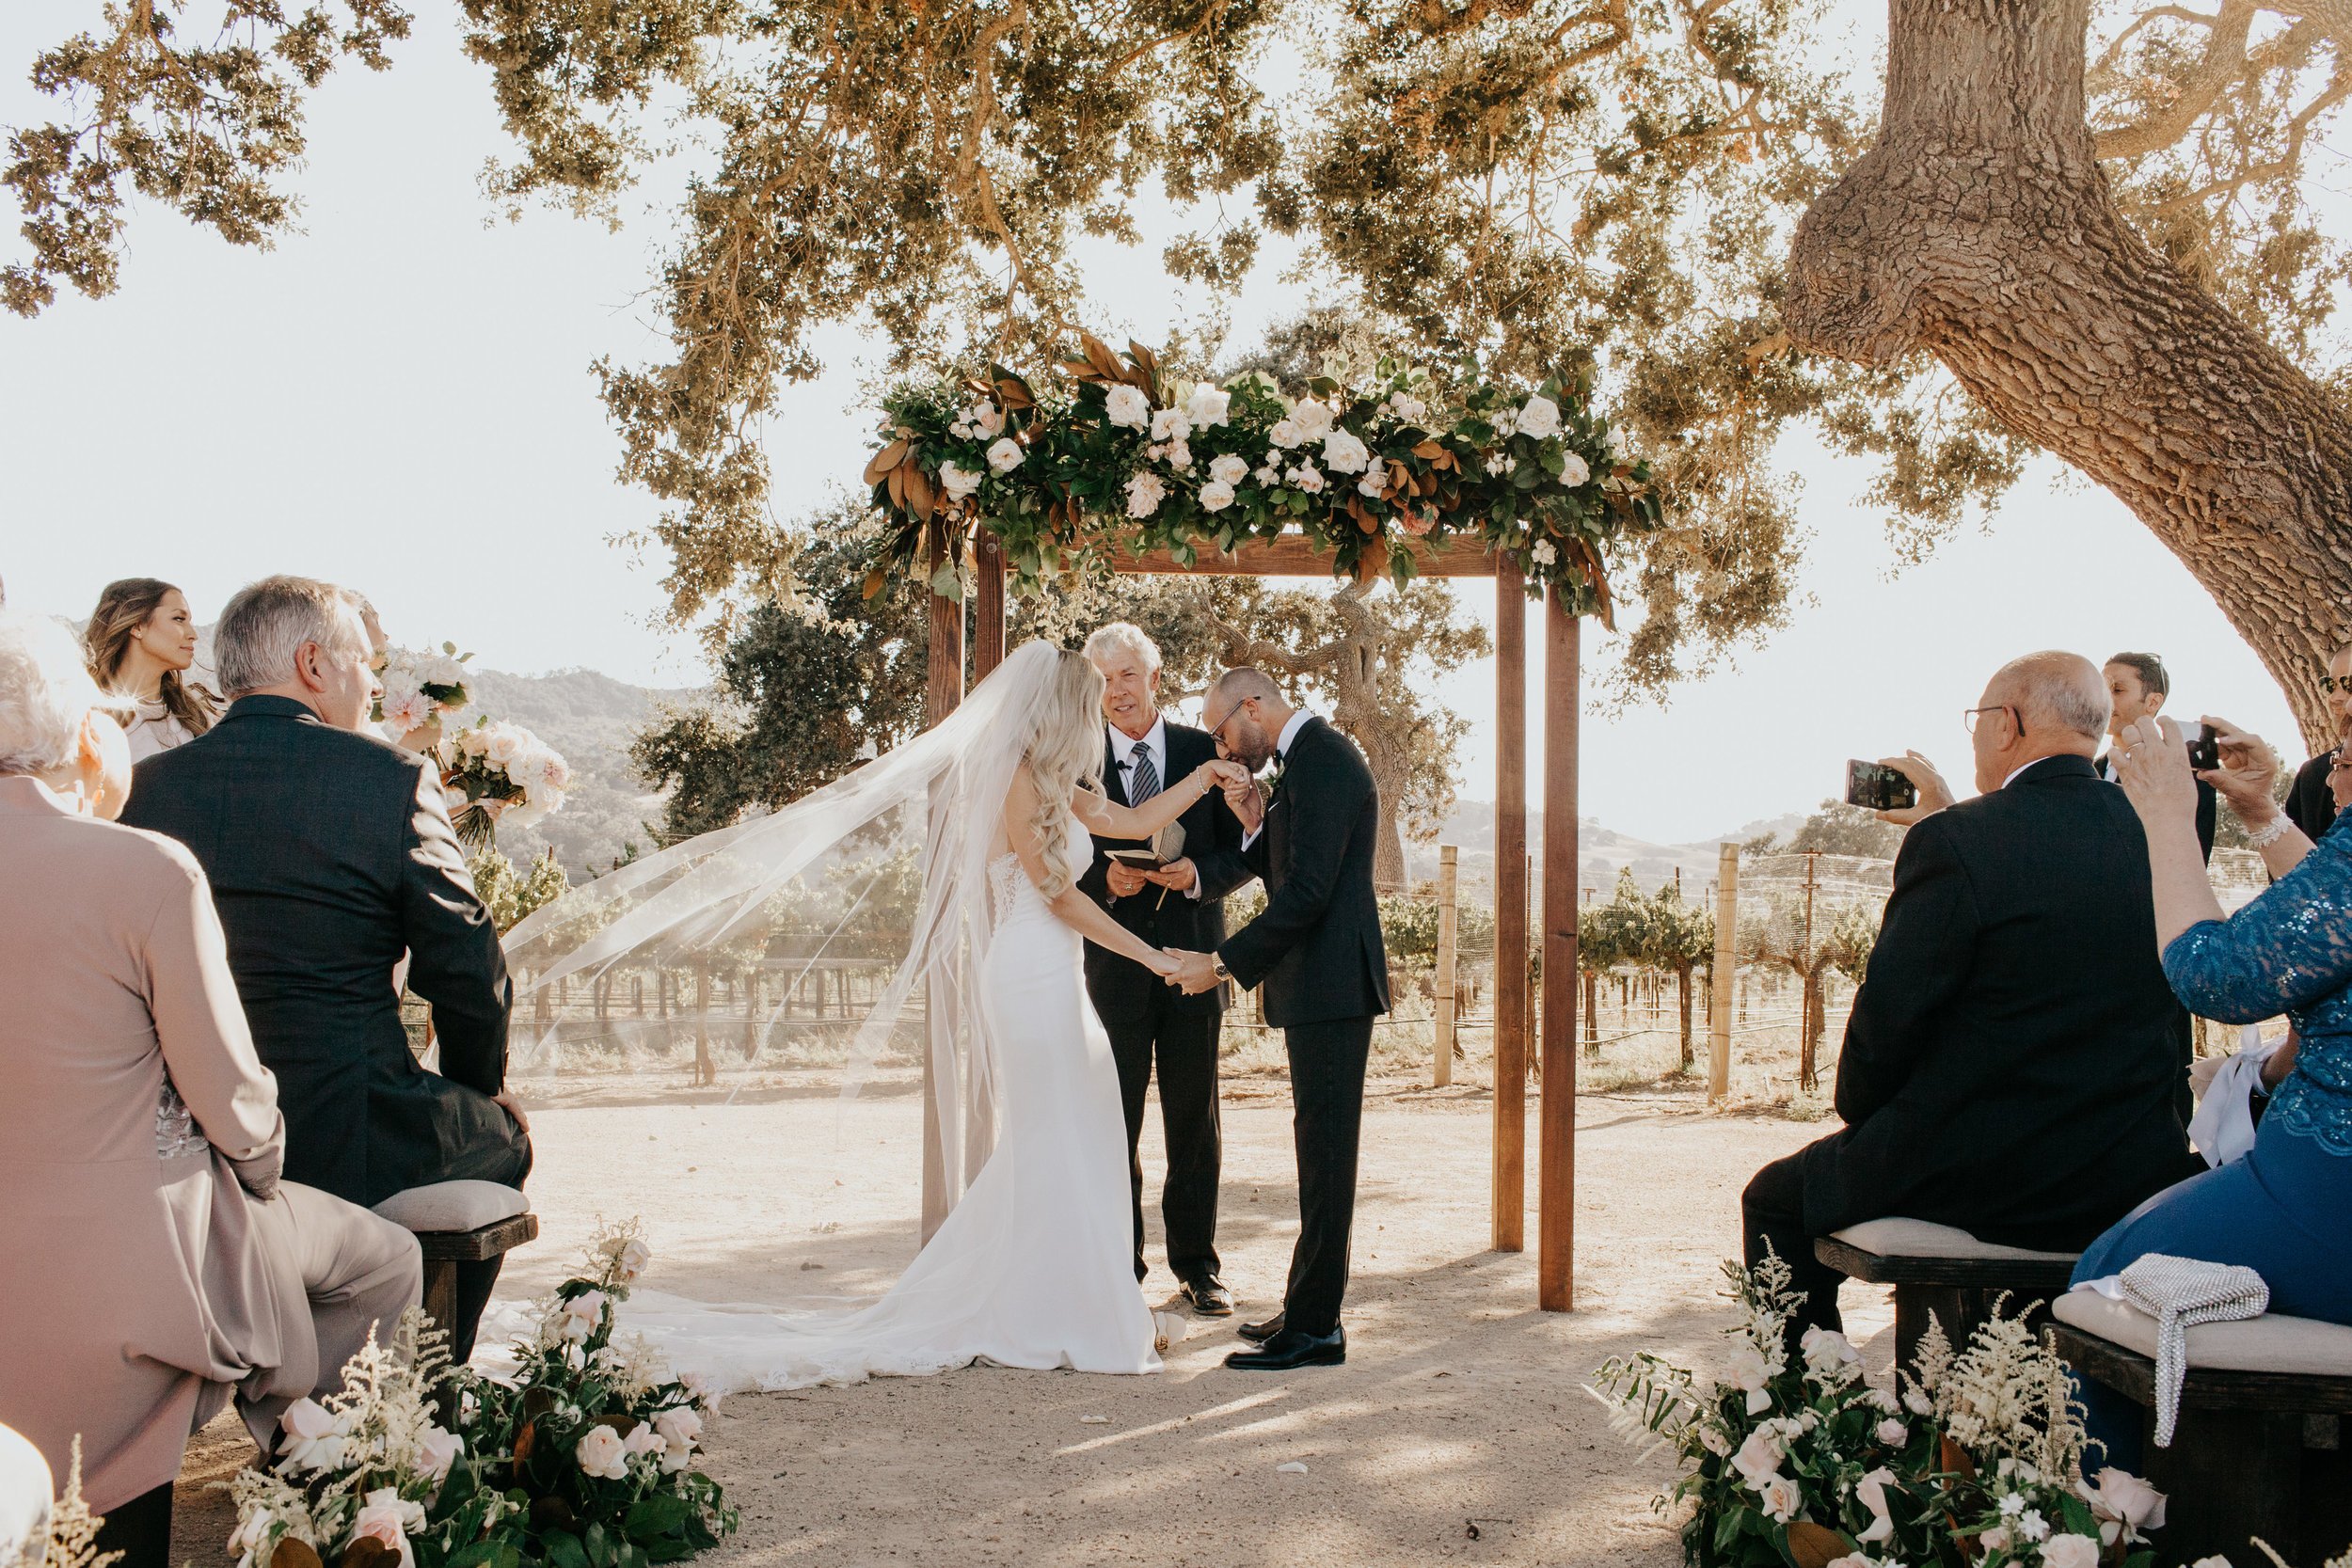 www.santabarbarawedding.com | Alexandria Monette Photography | Sunstone Villa | Soleil Events | Anna le Pley Taylor Flowers | Ocdamia Strings | Bride and Groom at the Ceremony